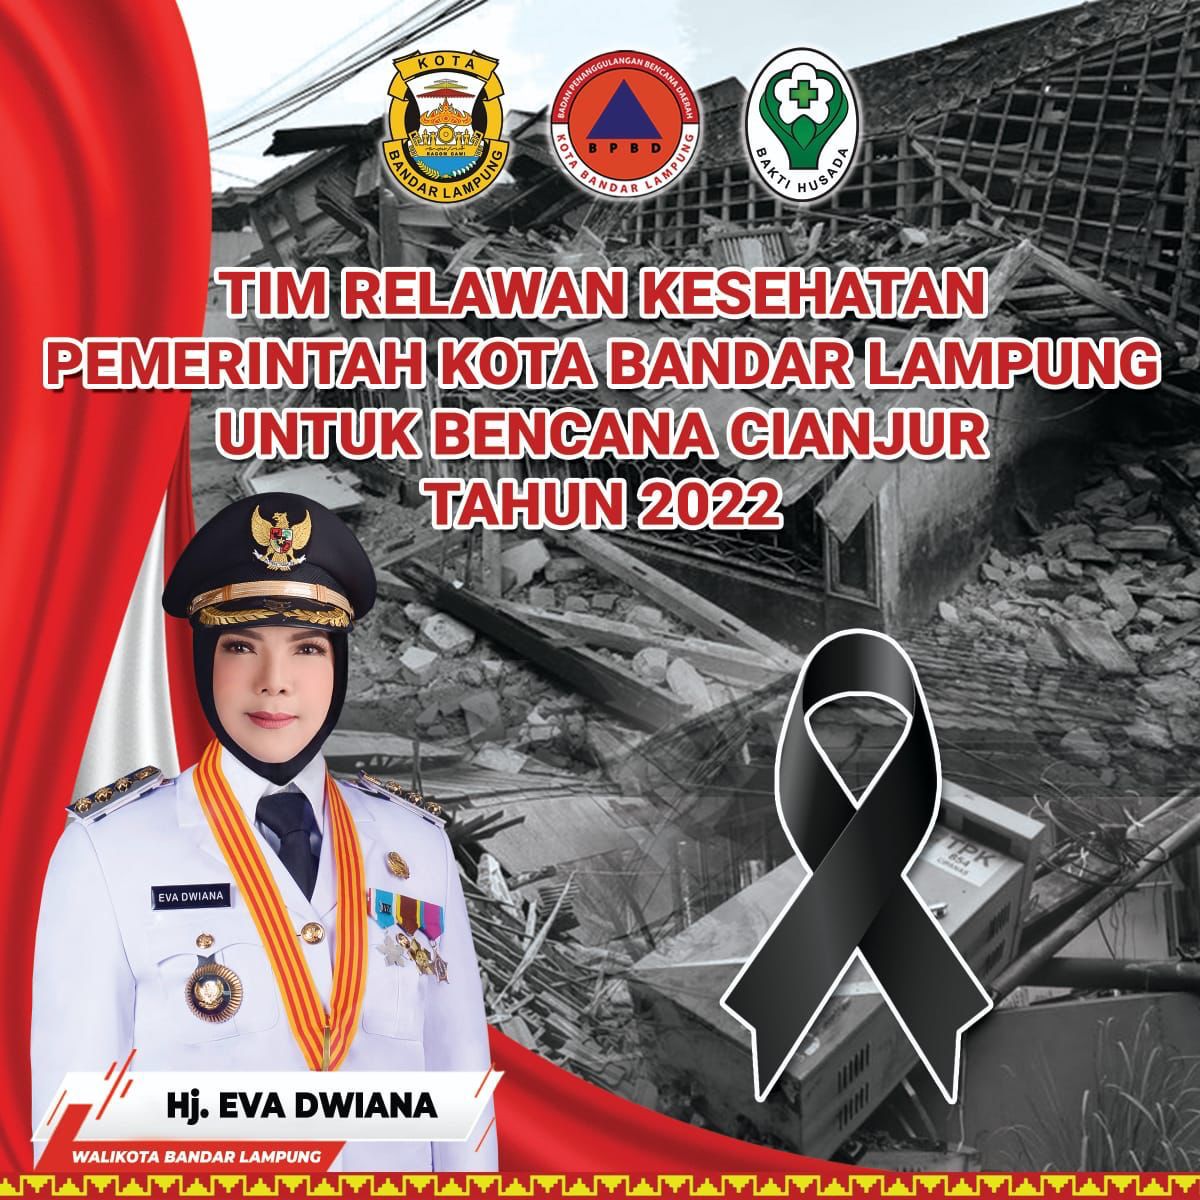 Walikota Bandar Lampung, Eva Dwiana mengirimkan bantuan untu korban bencana Gempa Cianjur || Foto: Dok. Kominfo Bandar Lampung